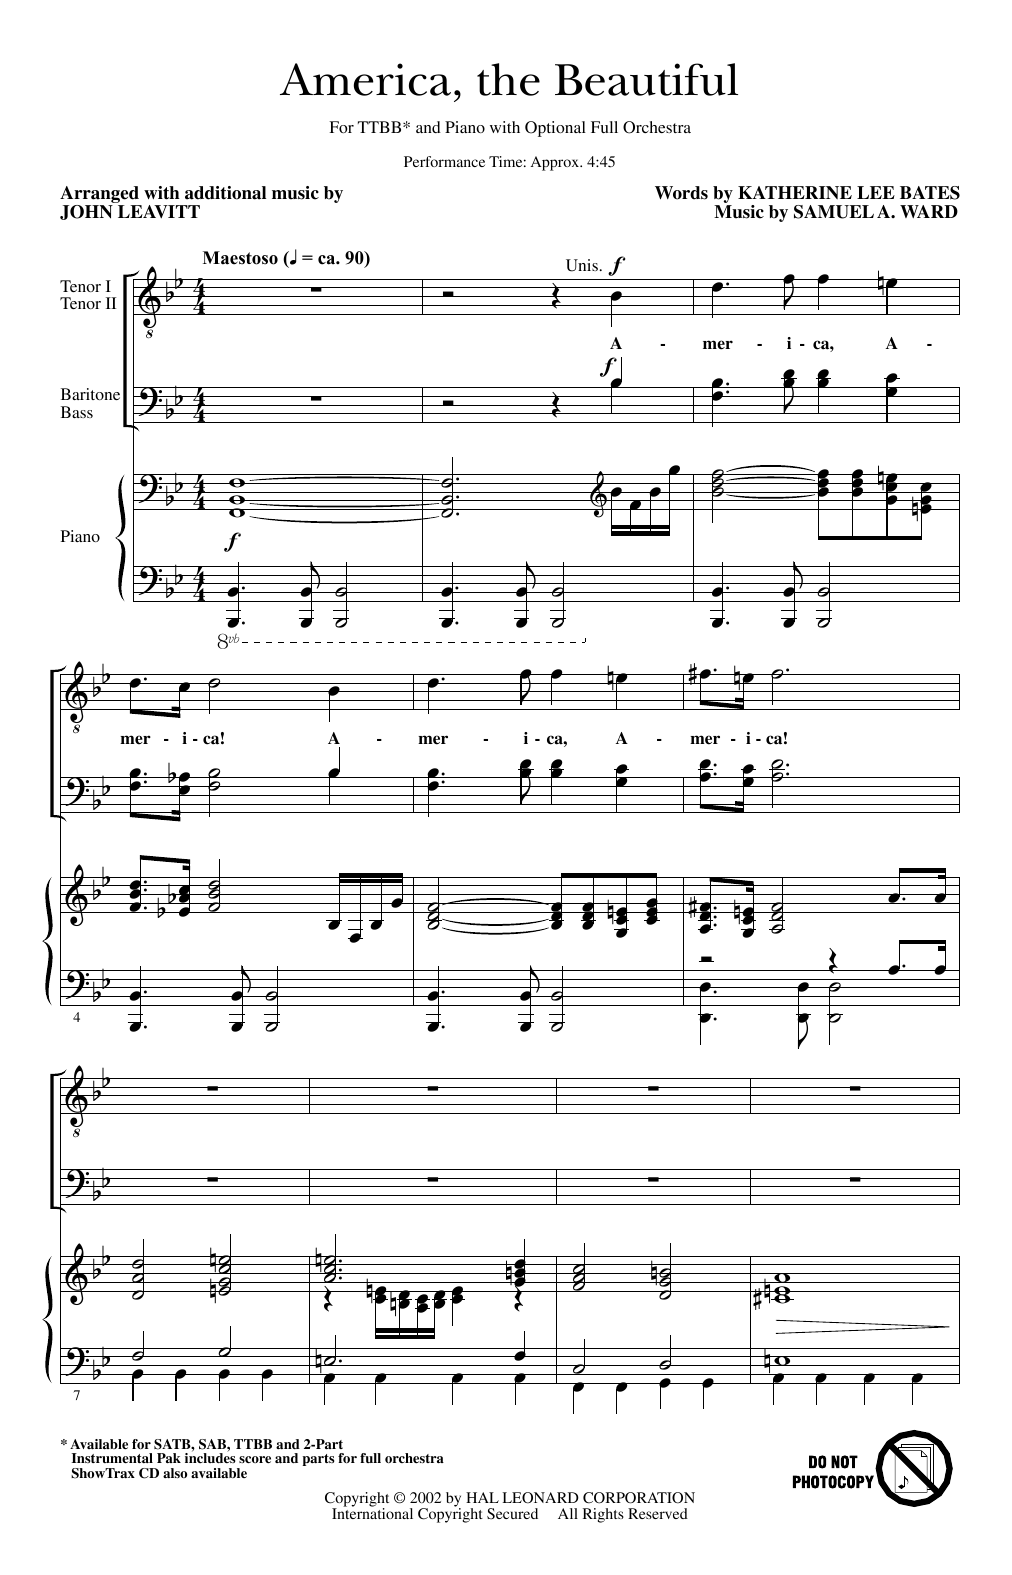 Samuel A. Ward America, The Beautiful (arr. John Leavitt) Sheet Music Notes & Chords for SATB Choir - Download or Print PDF